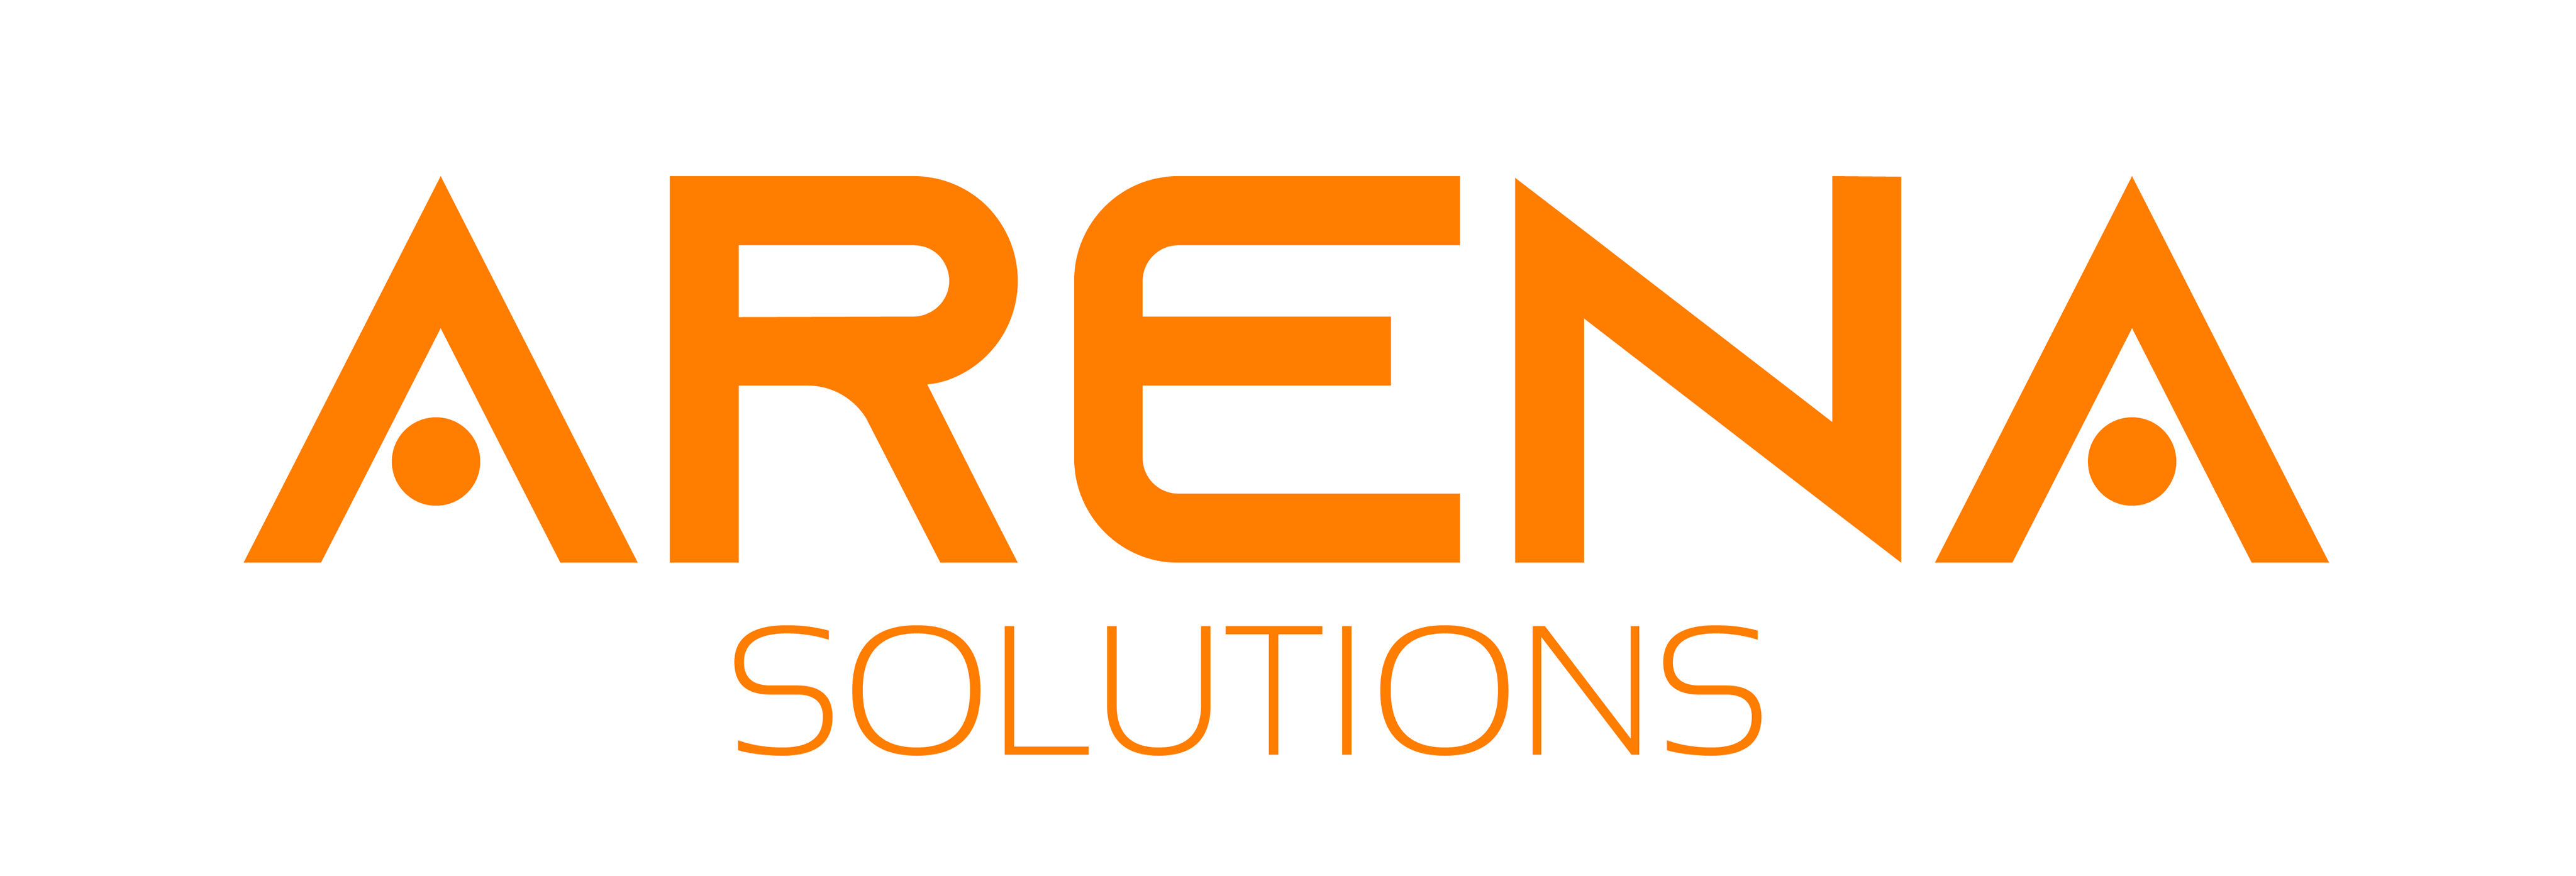 Arena Solutions, LLC.